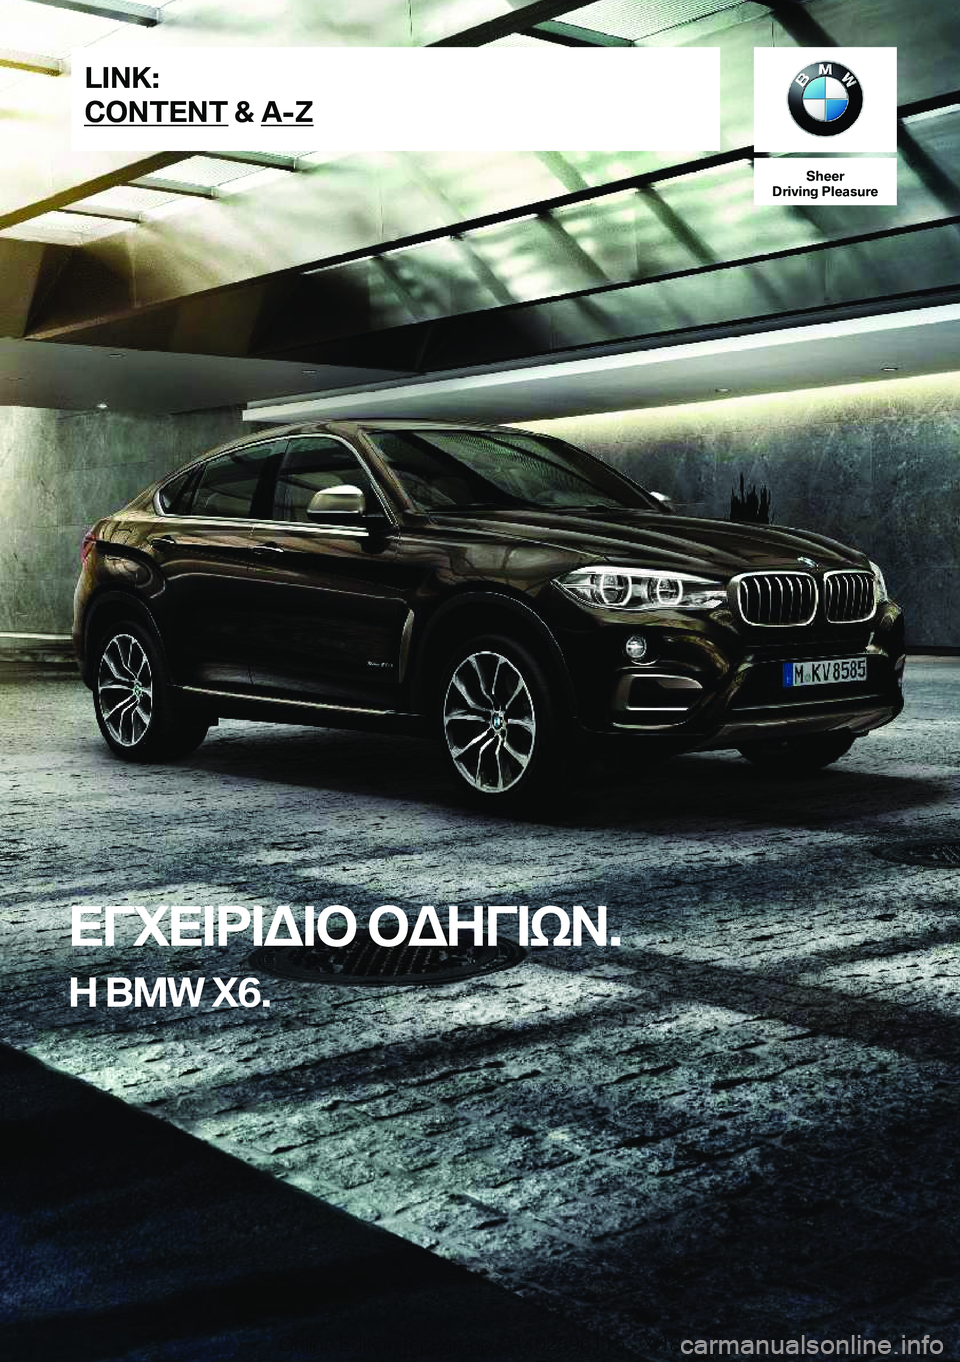 BMW X6 2019  ΟΔΗΓΌΣ ΧΡΉΣΗΣ (in Greek) �S�h�e�e�r
�D�r�i�v�i�n�g��P�l�e�a�s�u�r�e
XViX=d=W=b�bWZV=kA�.
Z��B�M�W��X�6�.�L�I�N�K�:
�C�O�N�T�E�N�T��&��A�-�Z�O�n�l�i�n�e��E�d�i�t�i�o�n��f�o�r��P�a�r�t��n�o�.��0�1�4